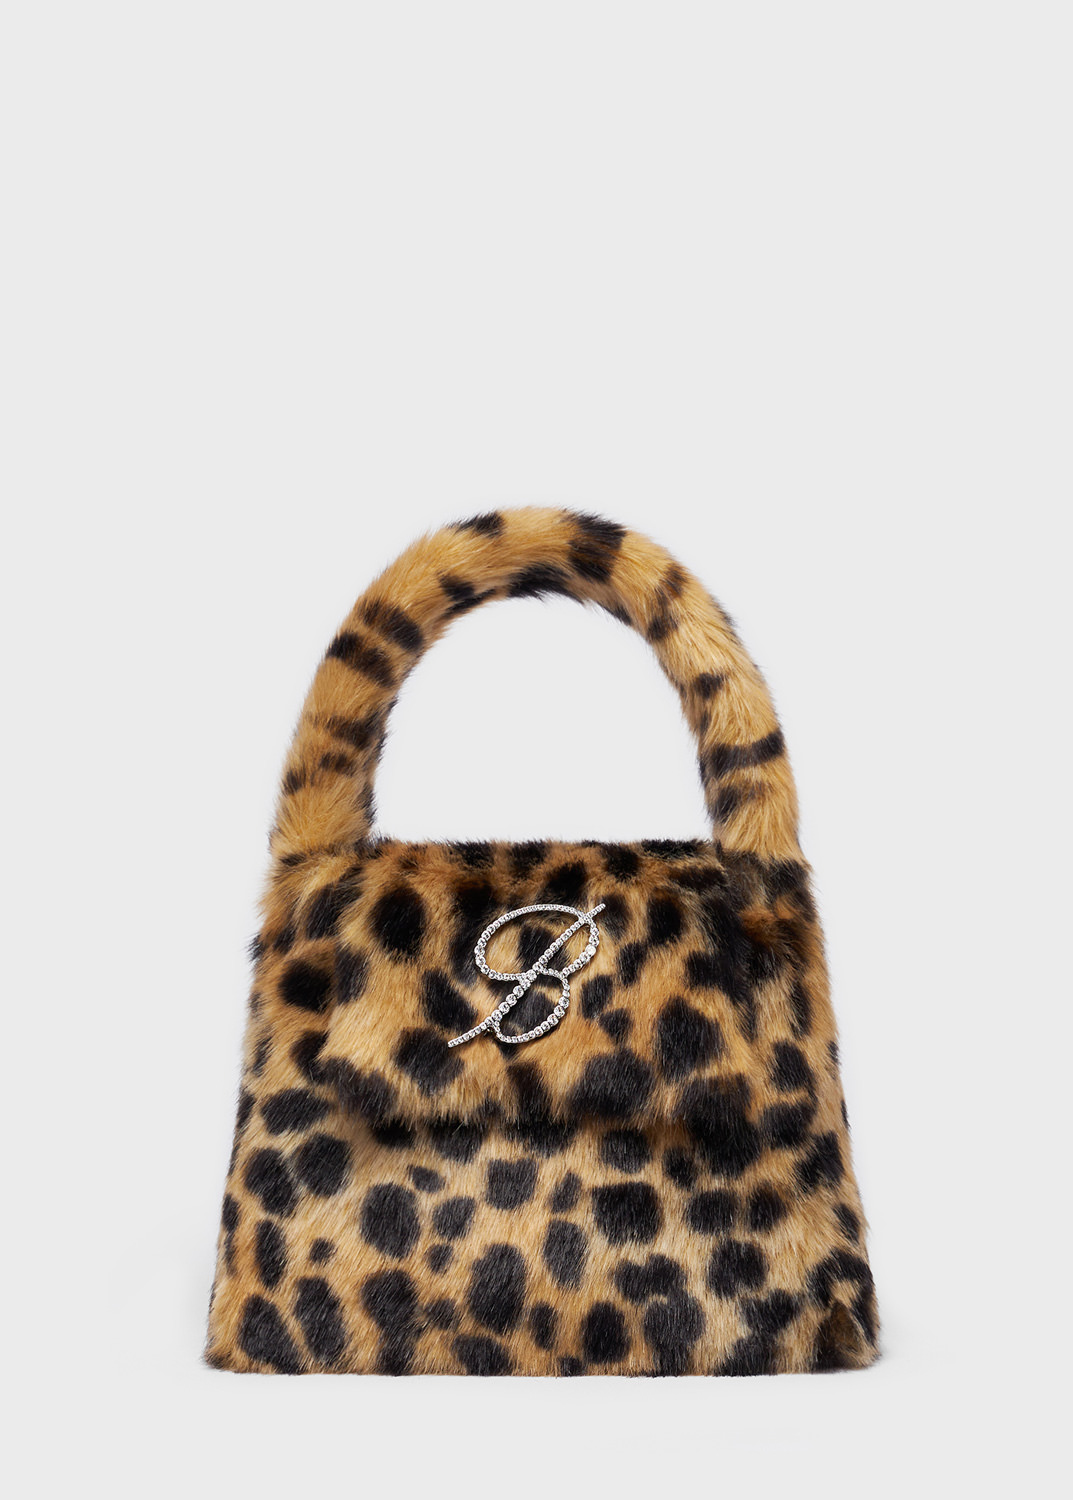 Animalier print faux fur bag with rhinestone B monogram pin